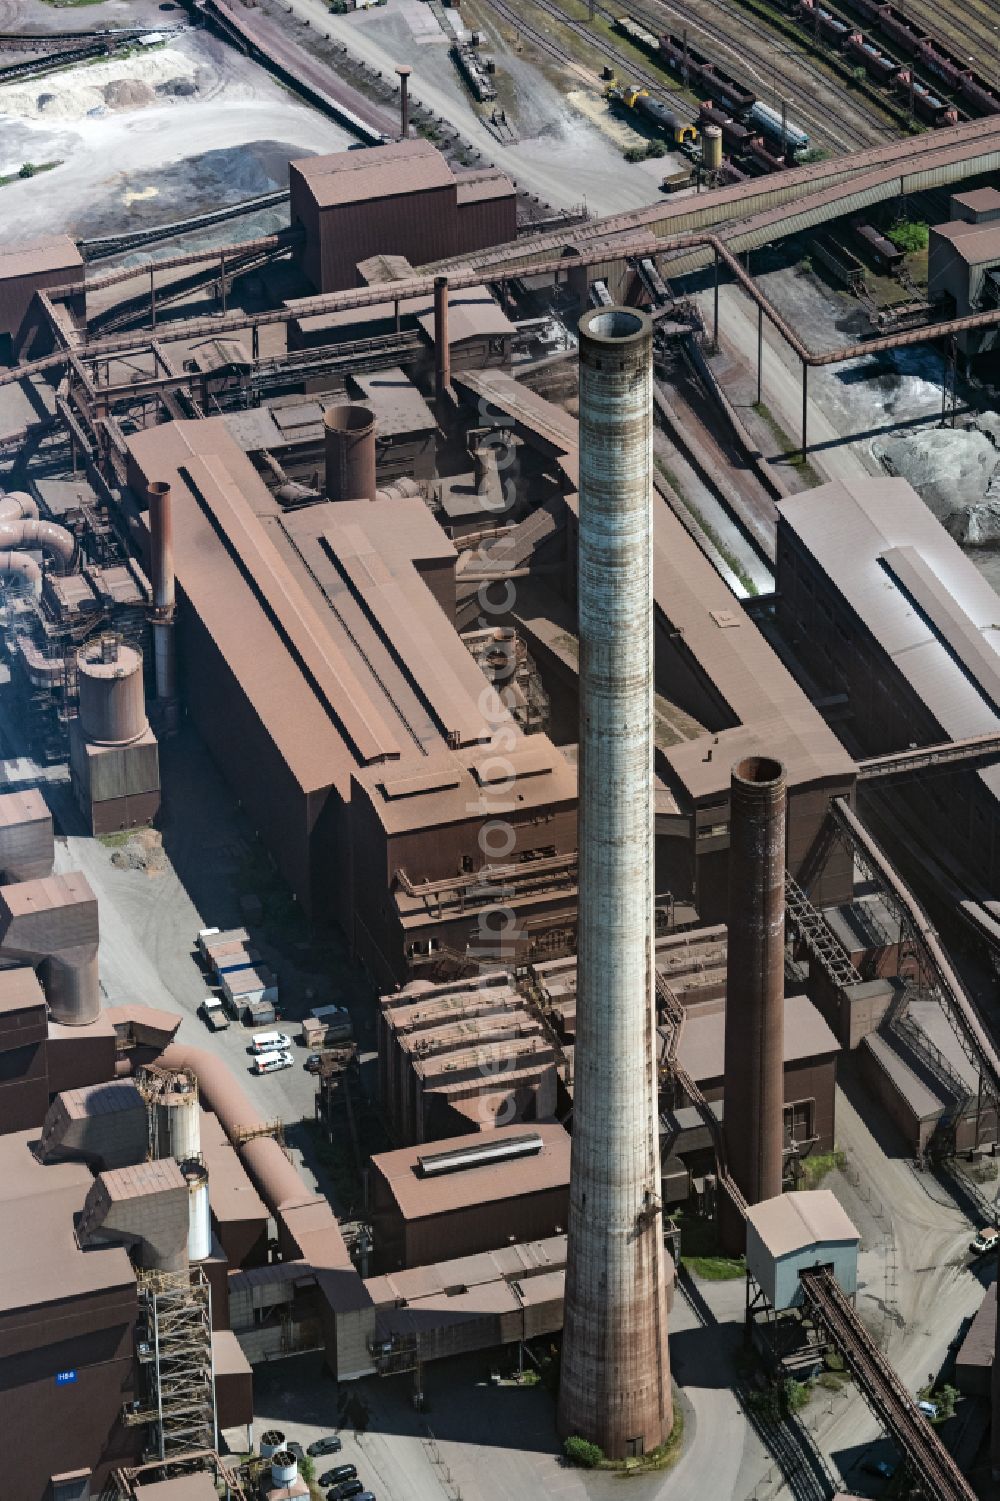 Aerial photograph Dillingen/Saar - Technical equipment and production facilities of the steelworks Zentralkokerei Saar GmbH in Dillingen/Saar in the state Saarland, Germany